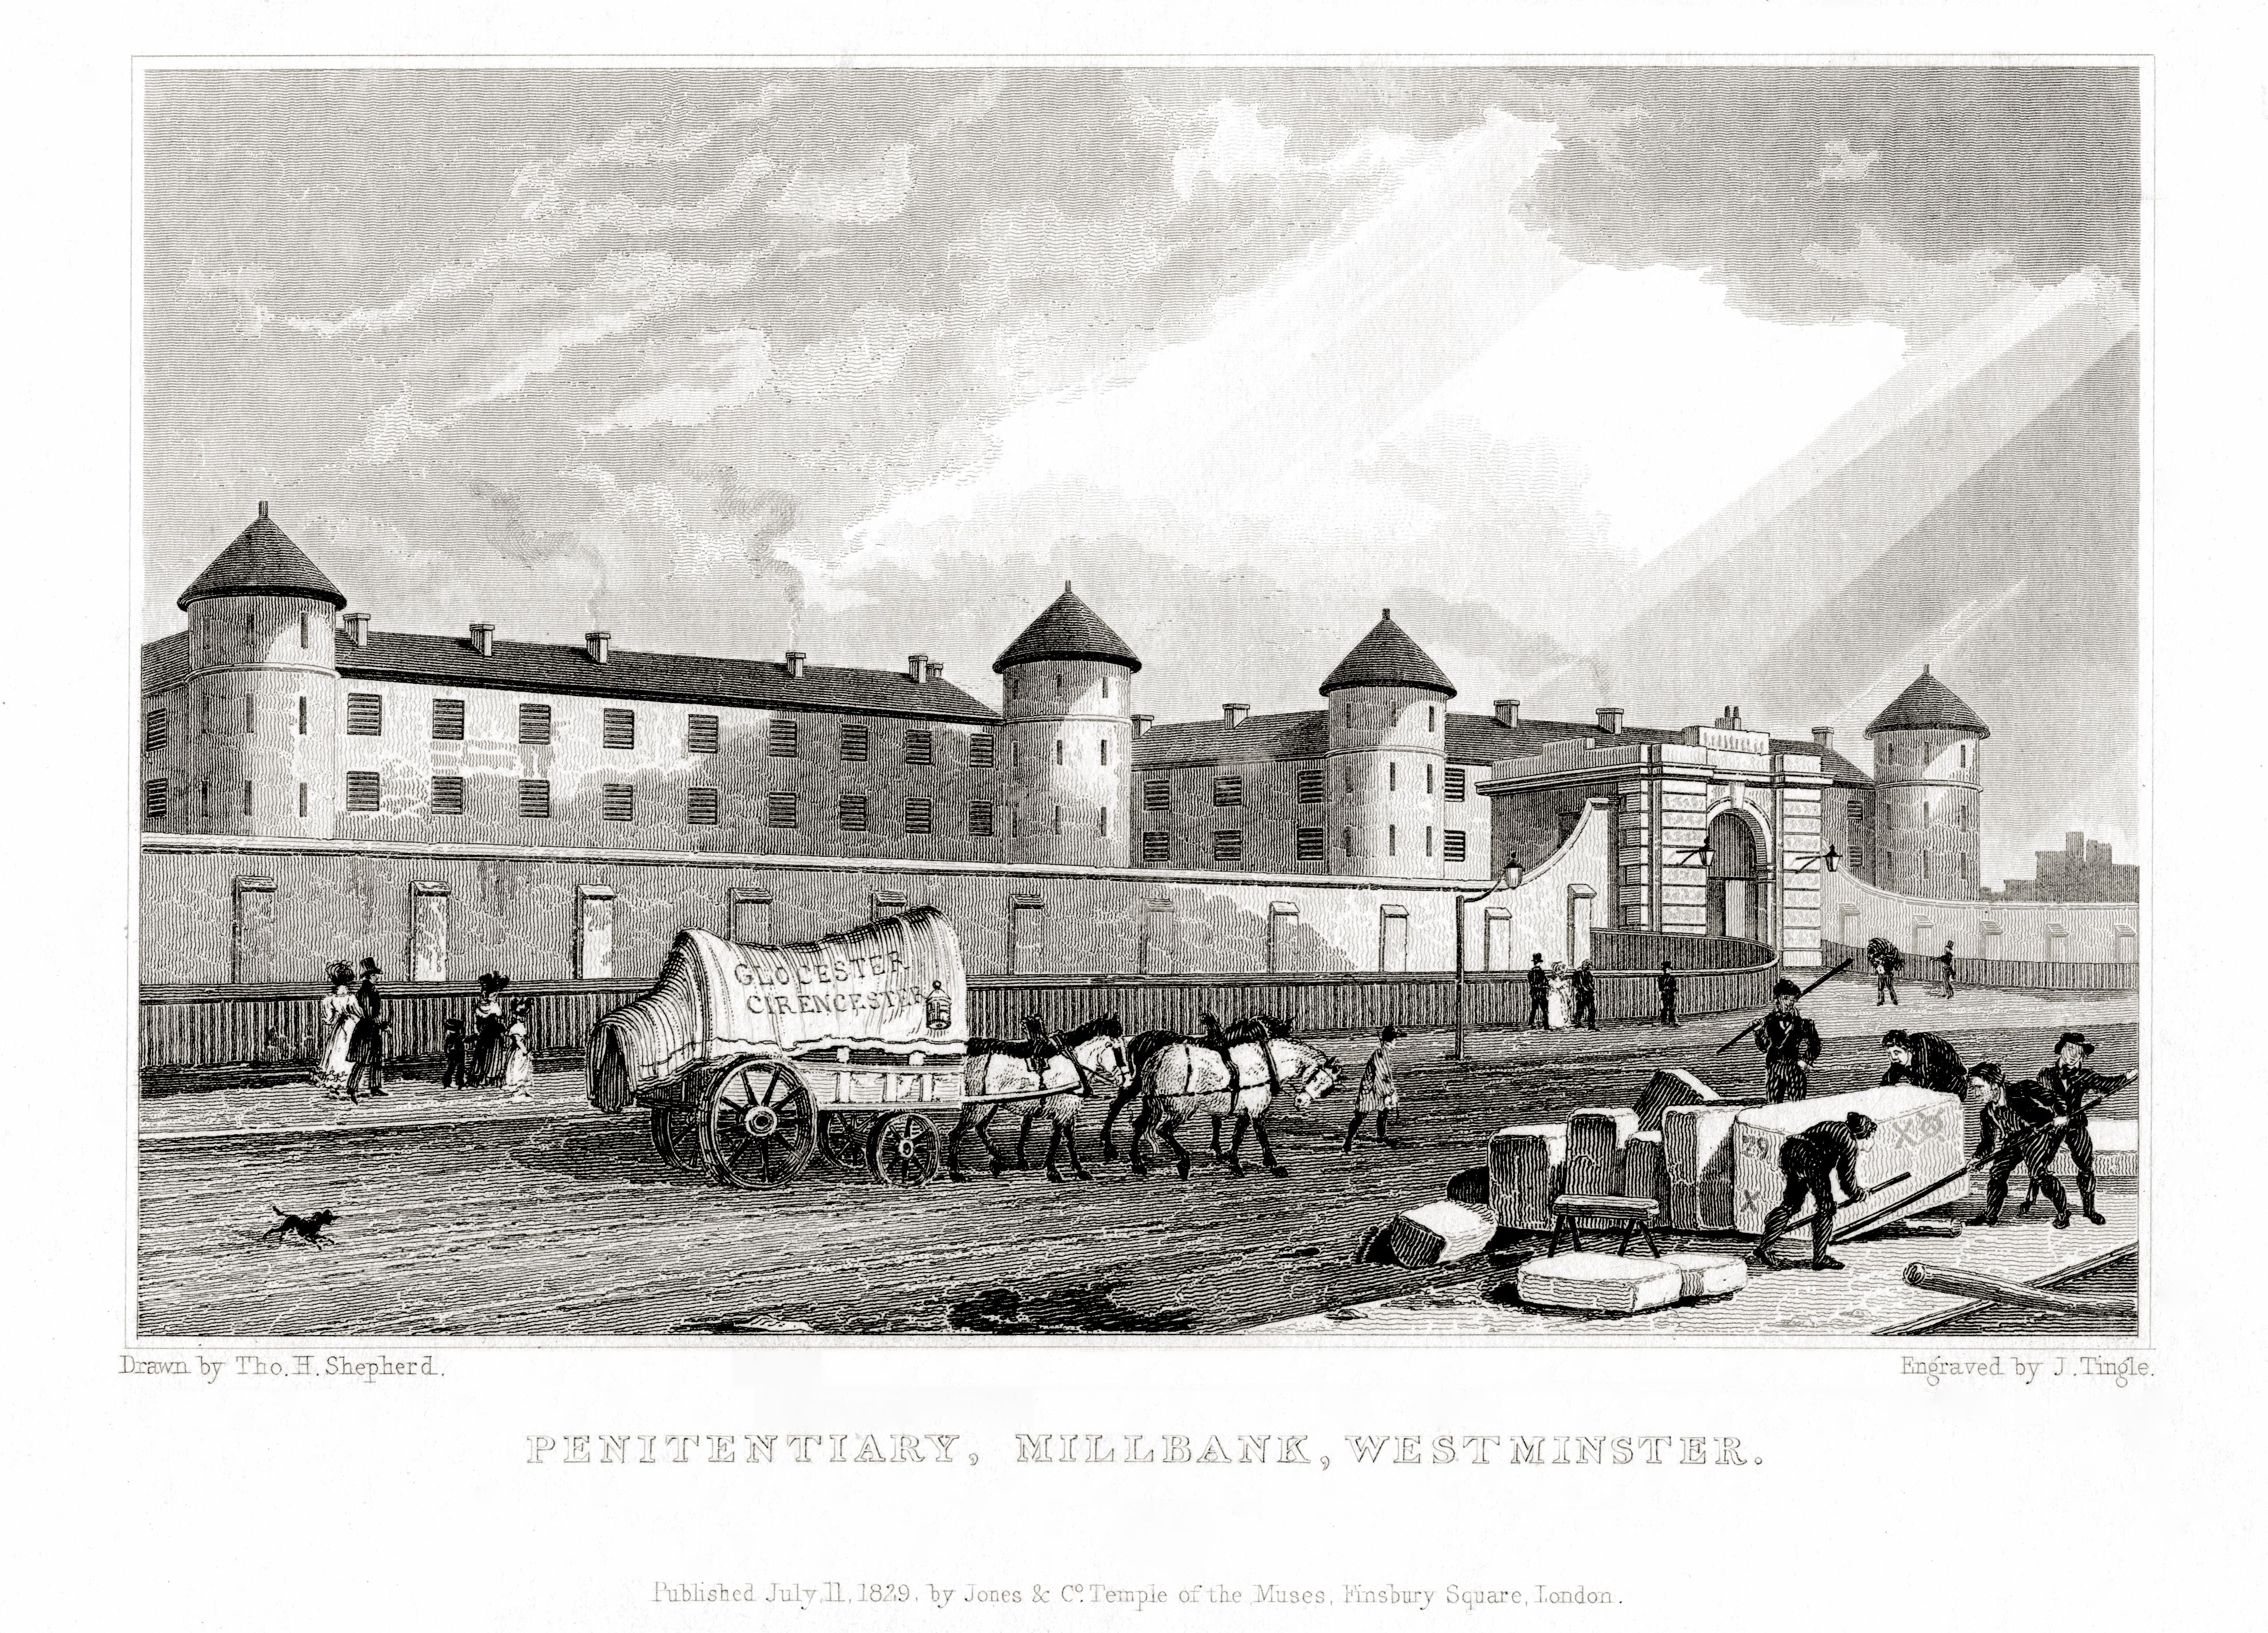 London Millbank Penitentiary,prints